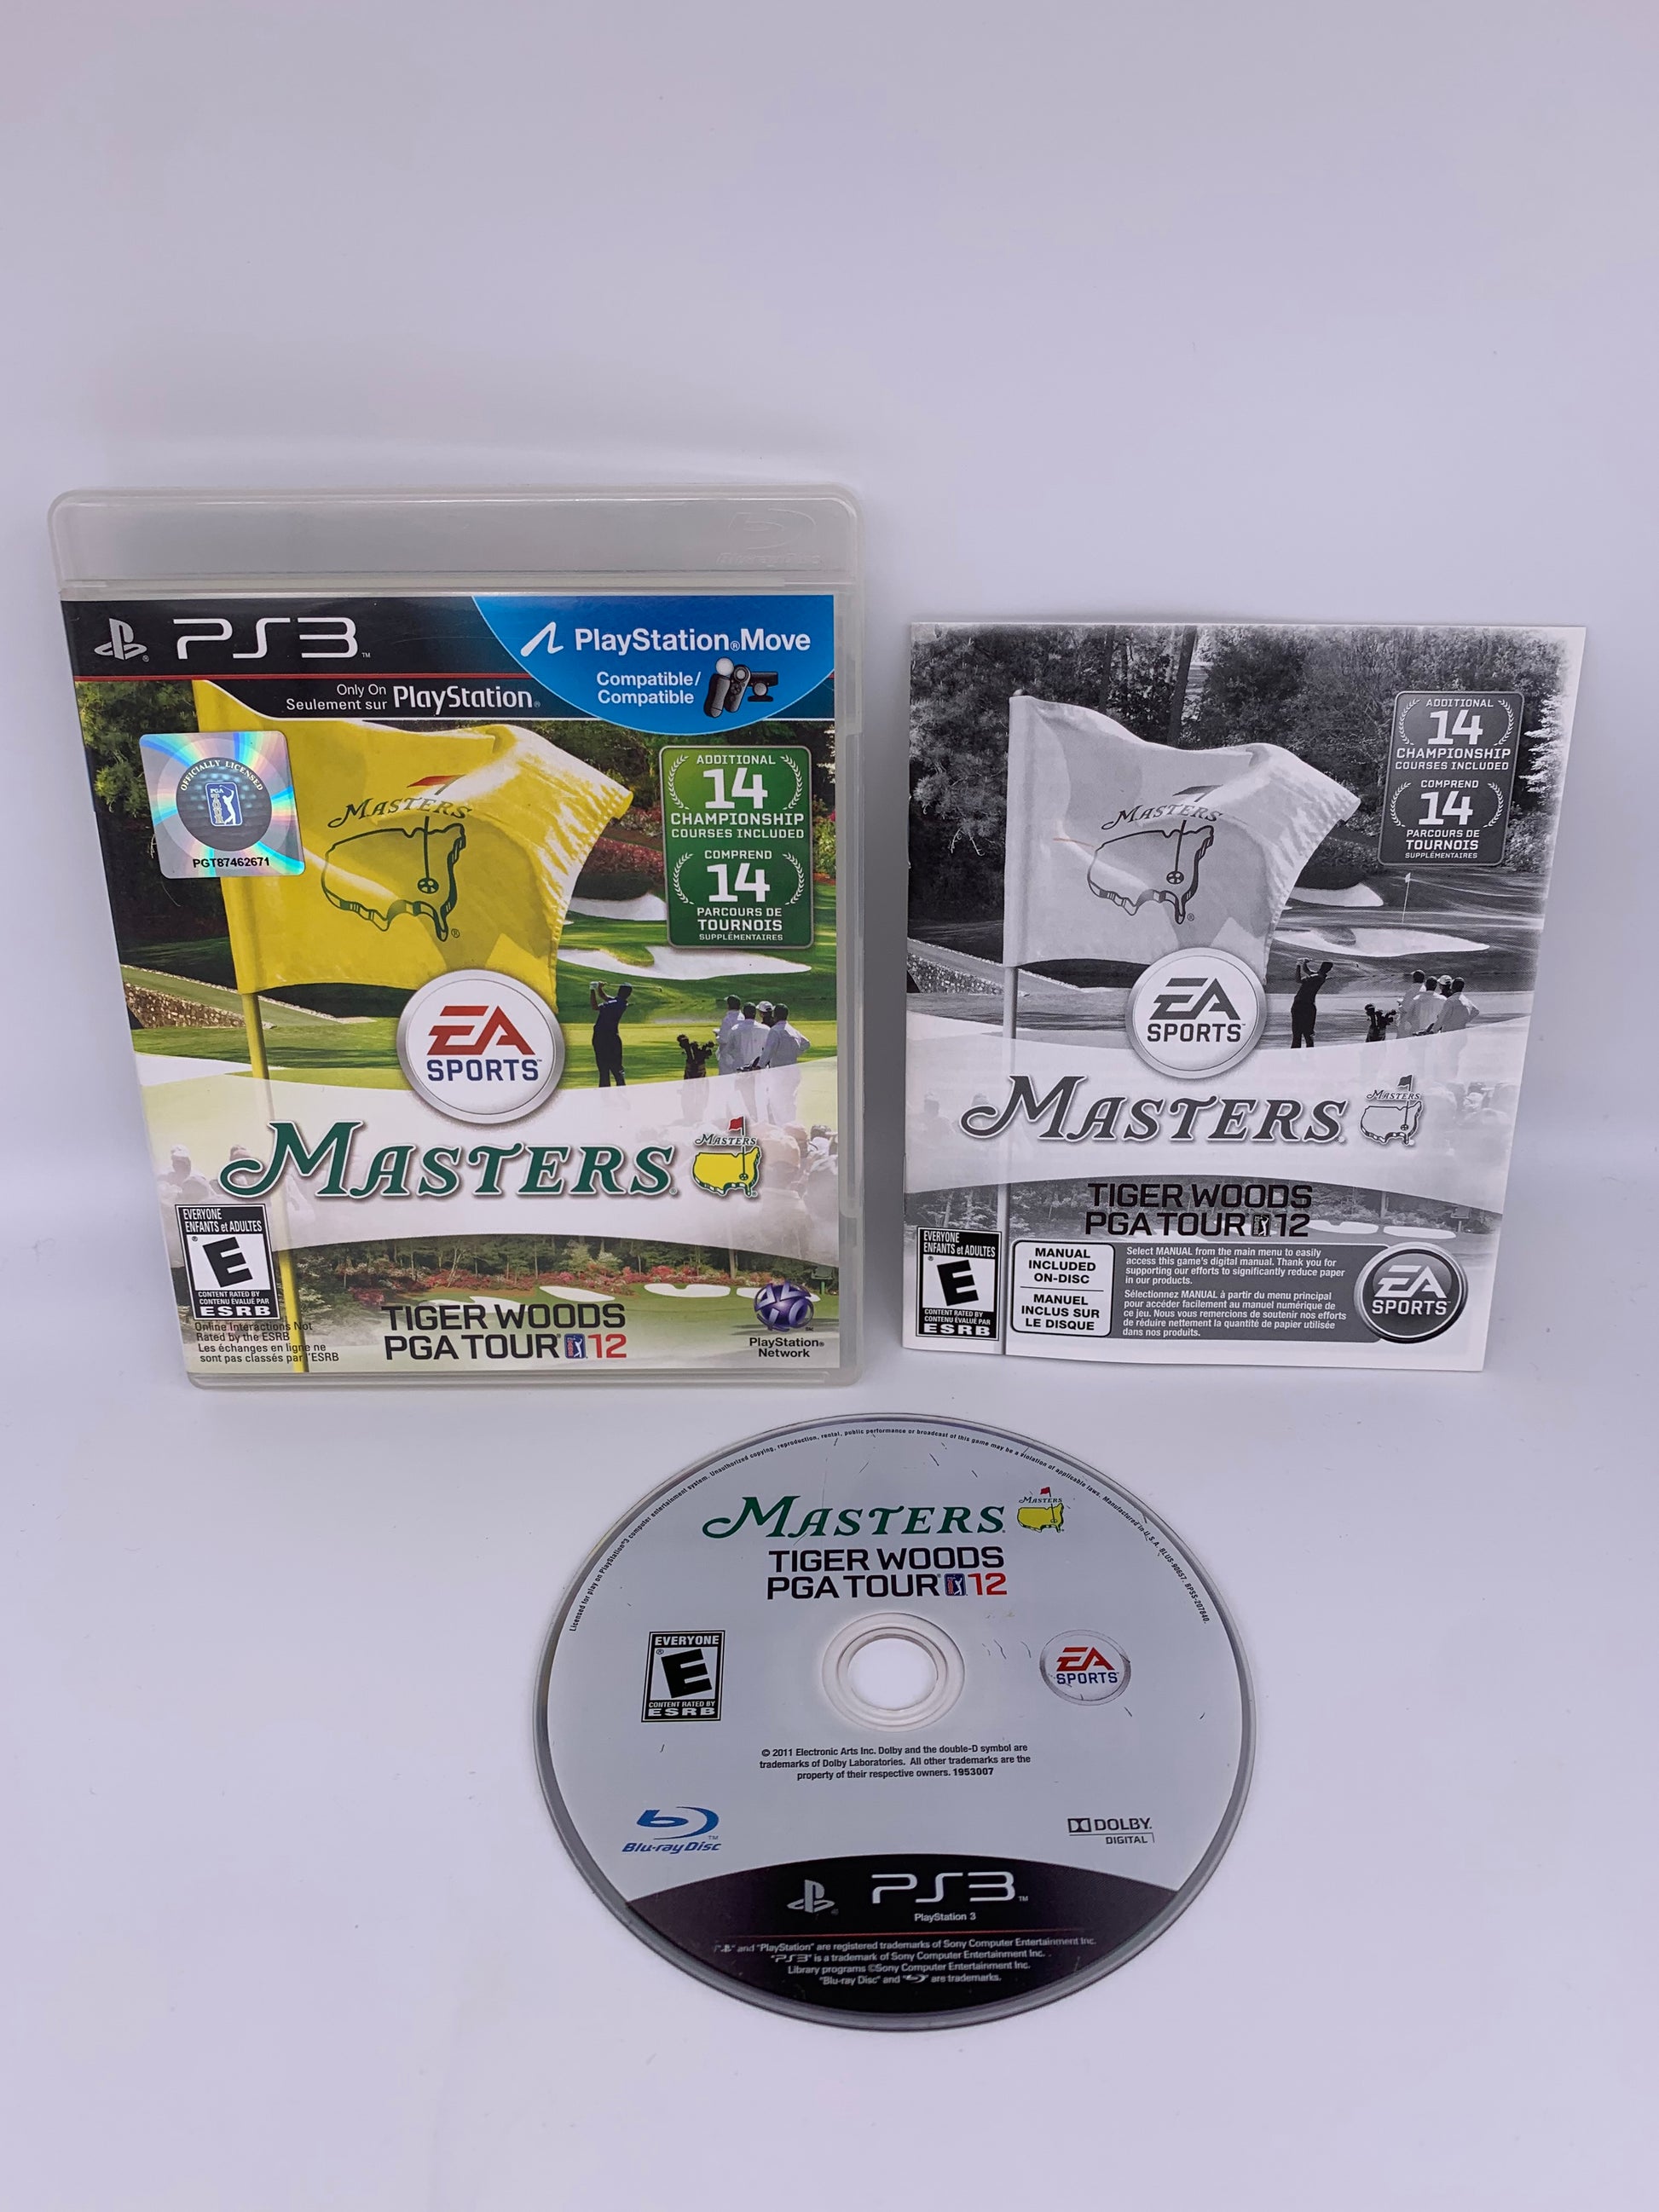 PiXEL-RETRO.COM : SONY PLAYSTATION 3 (PS3) COMPLET CIB BOX MANUAL GAME NTSC TIGER WOODS PGA TOUR 12 MASTERS